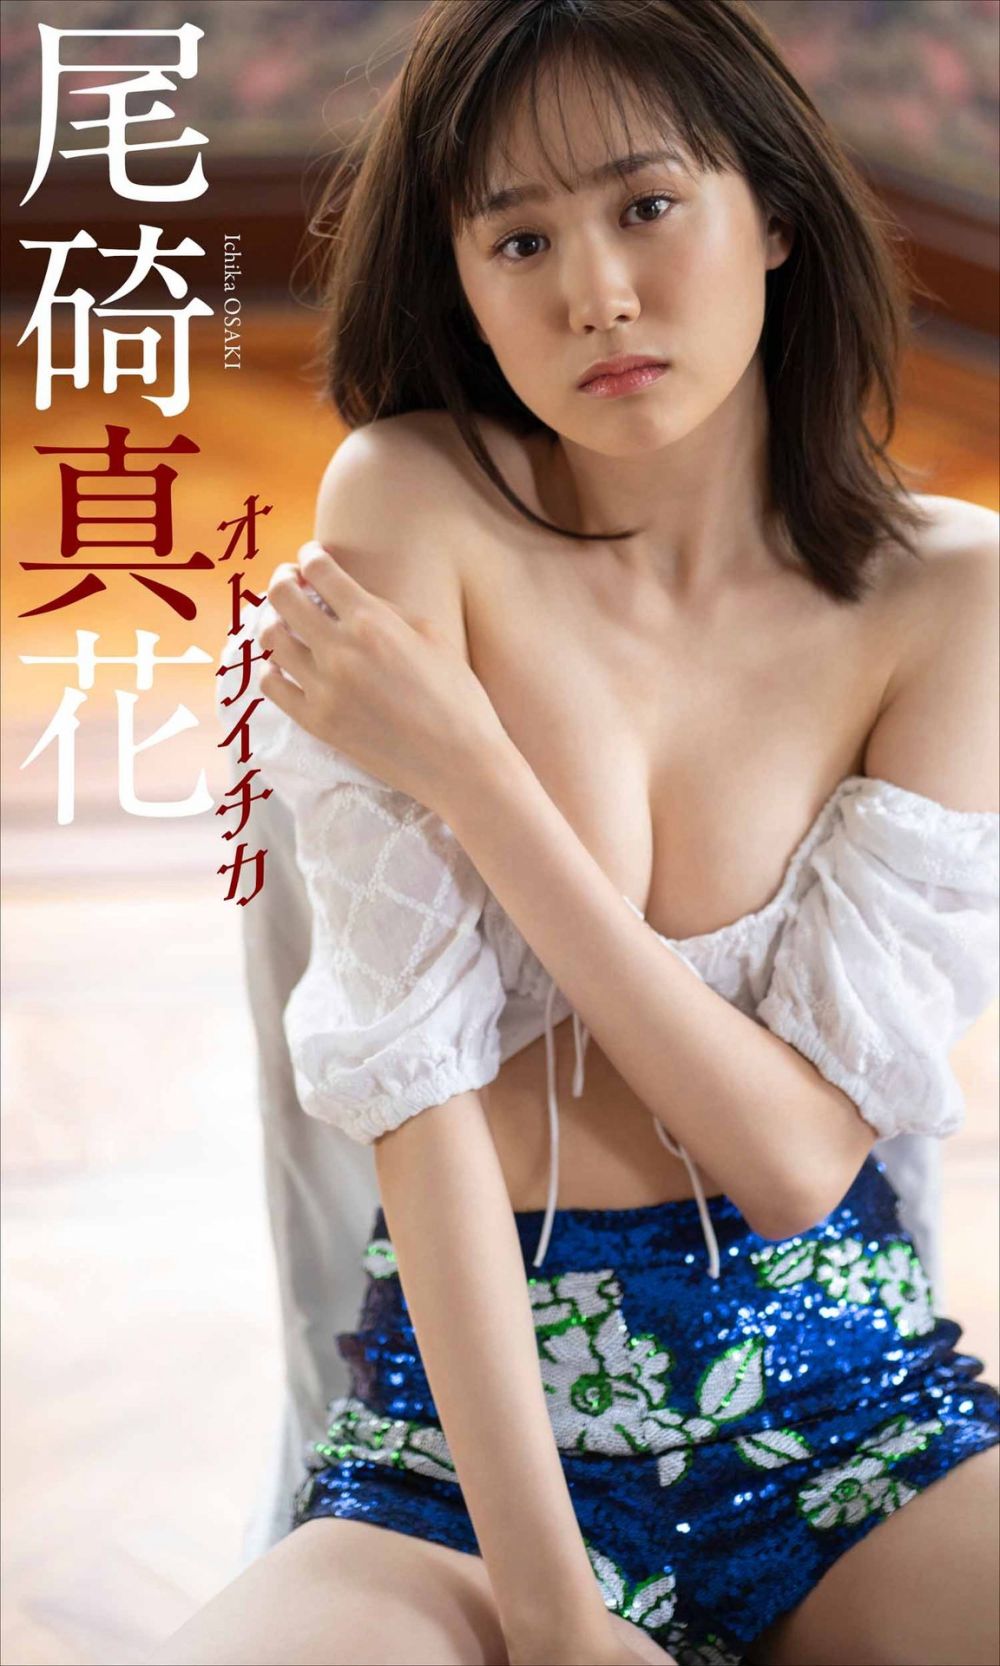 Ichika Osaki Sexy and Hottest Photos , Latest Pics